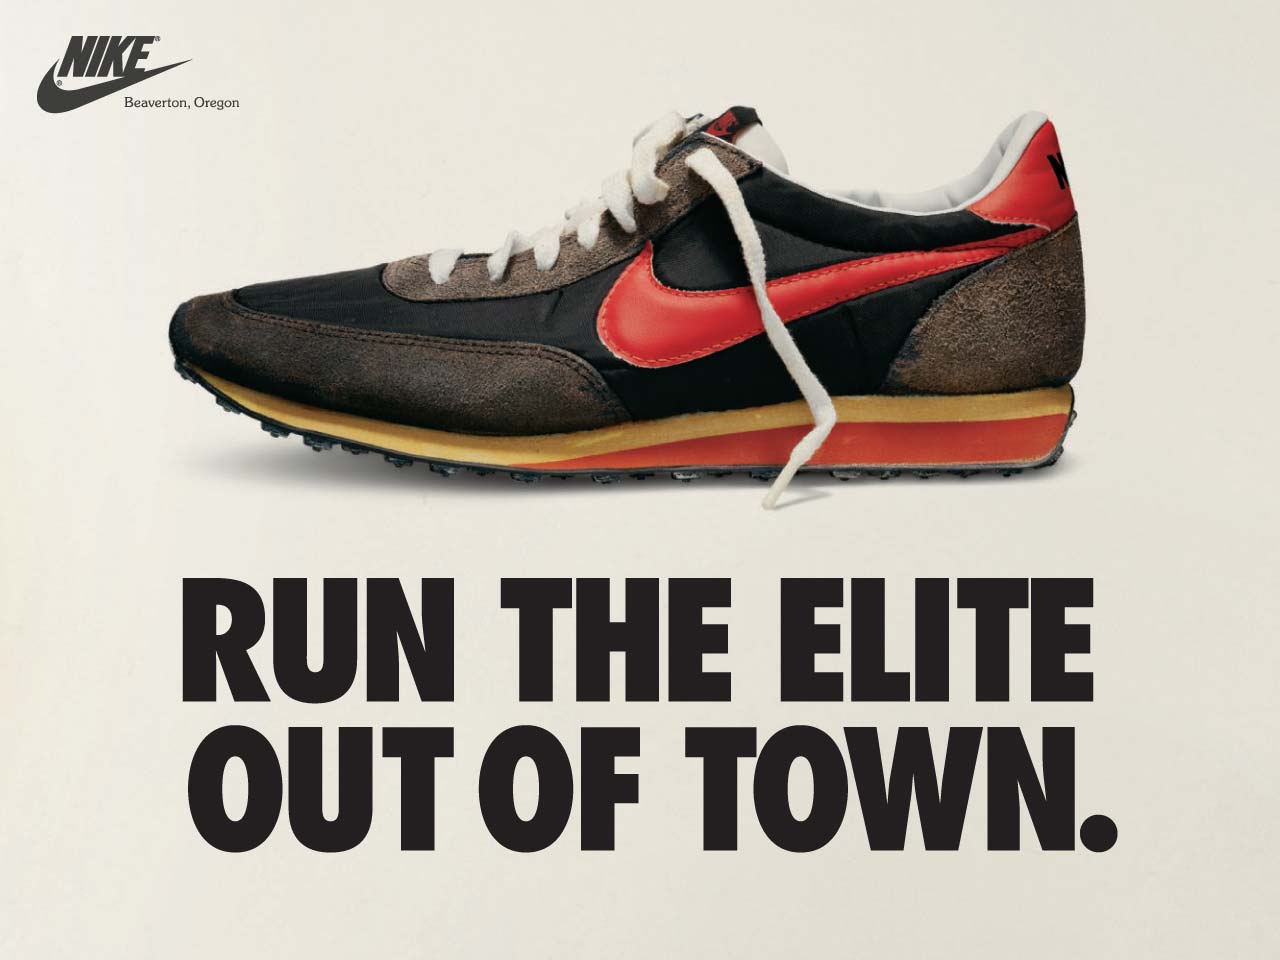 Vintage Nike Running Wallpaper